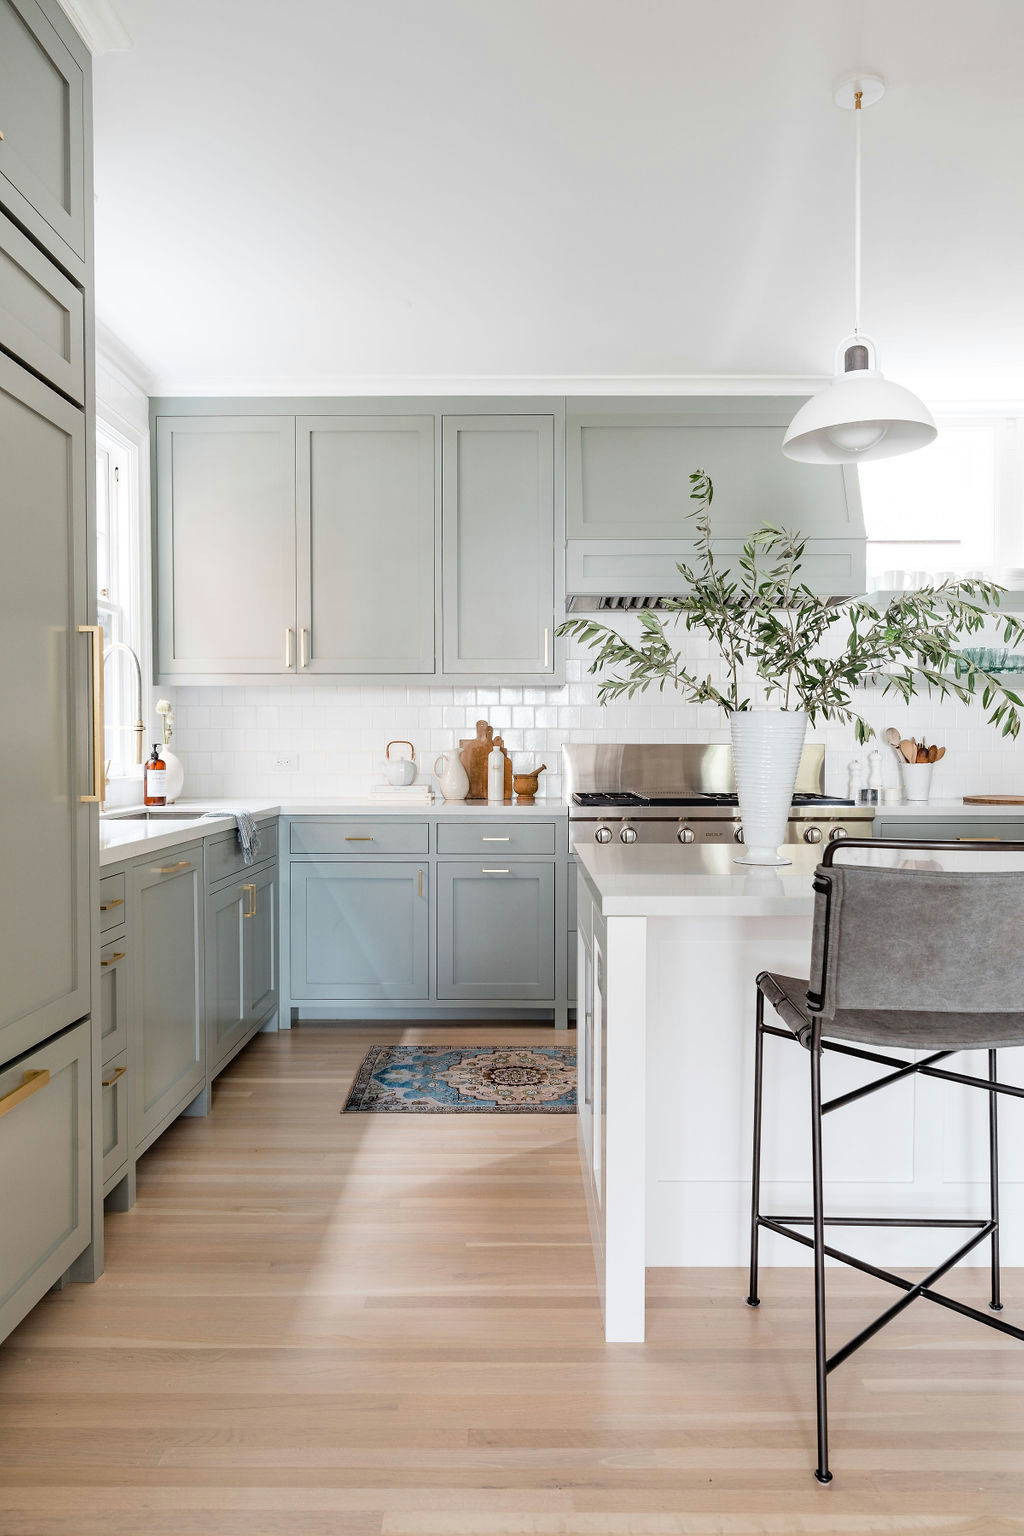 4 X 4 Kitchen Backsplash Tiles – Things In The Kitchen